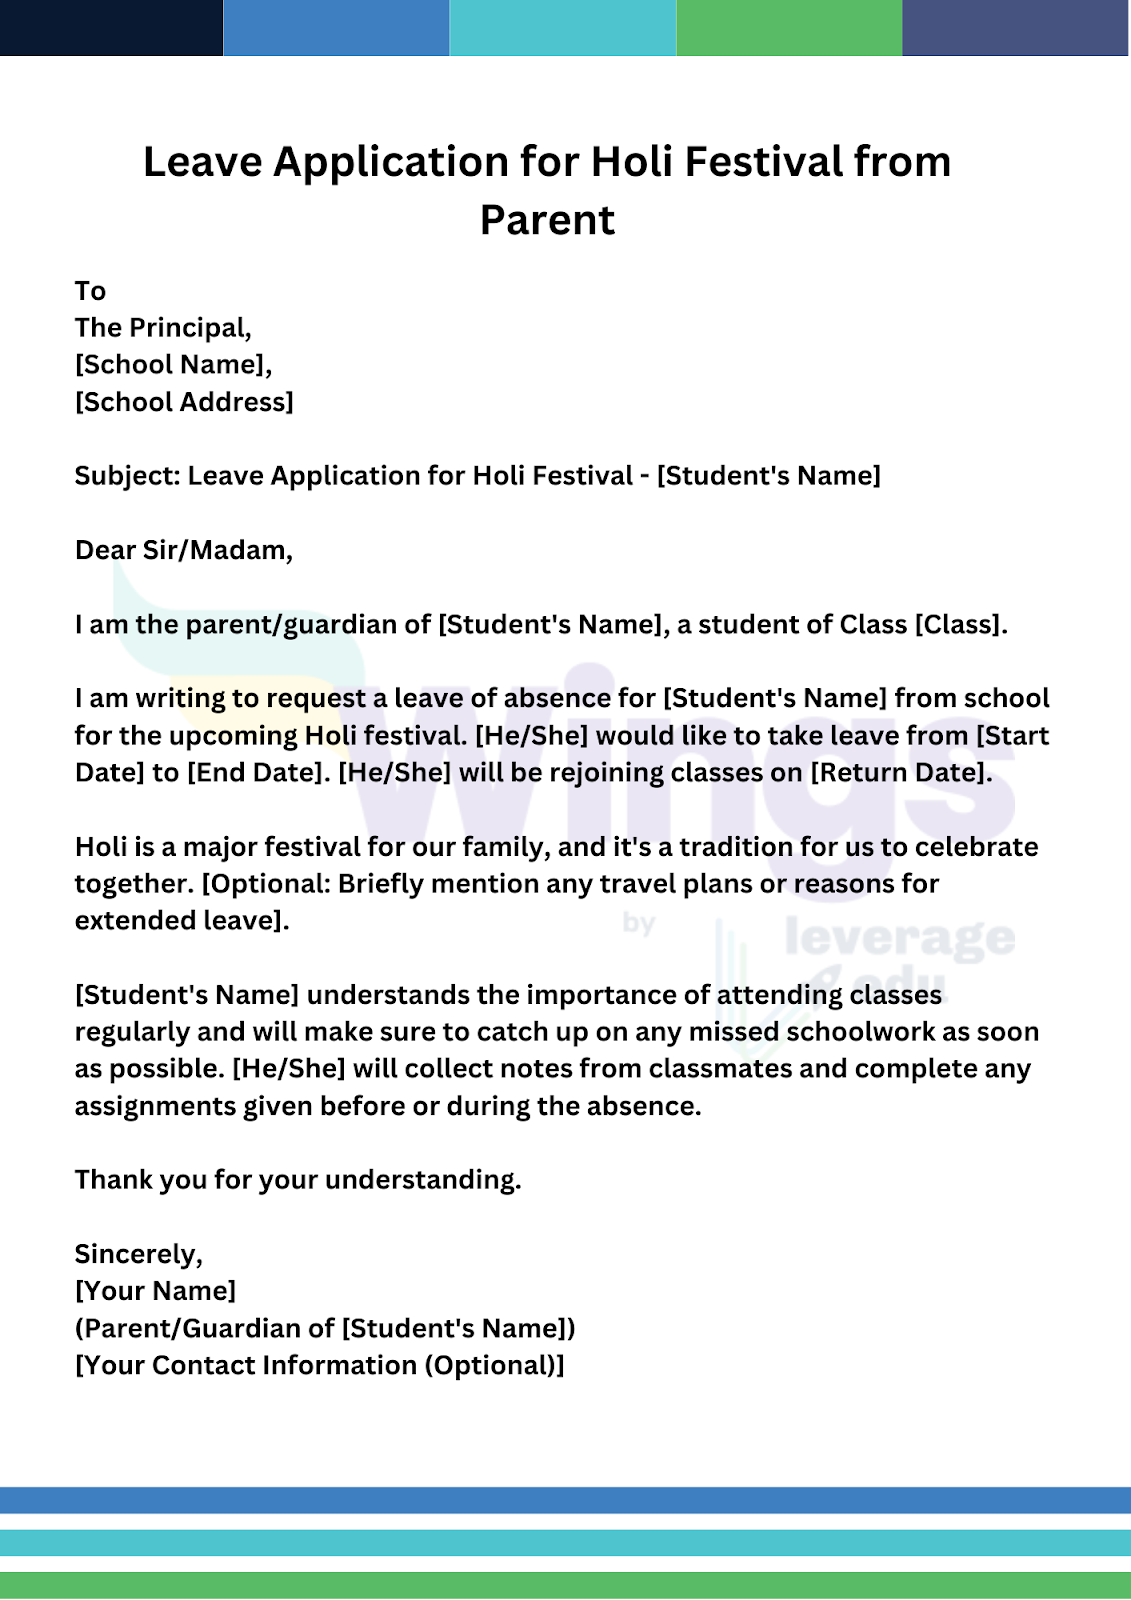 format of leave application letter